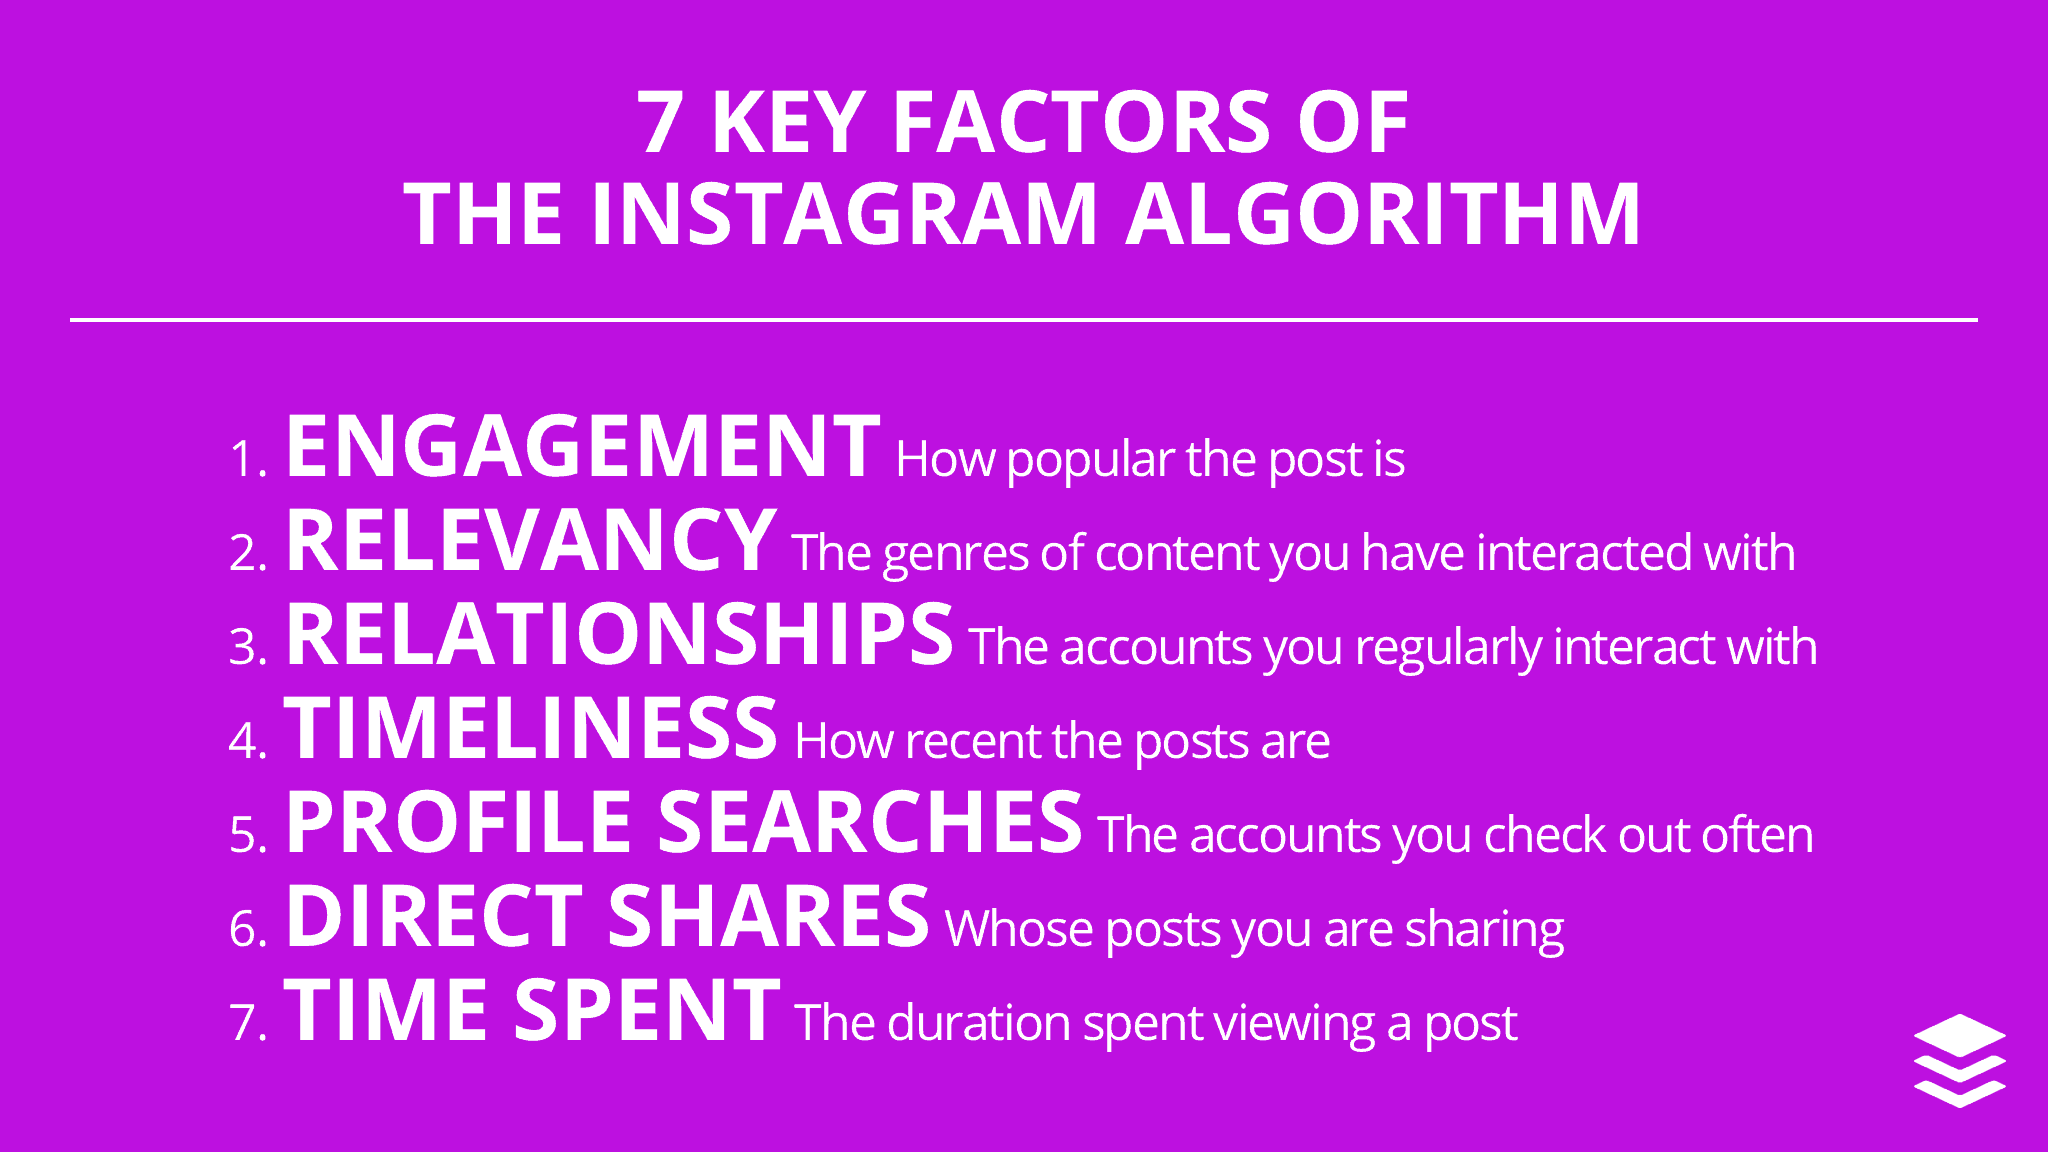 How the Instagram Algorithm Works